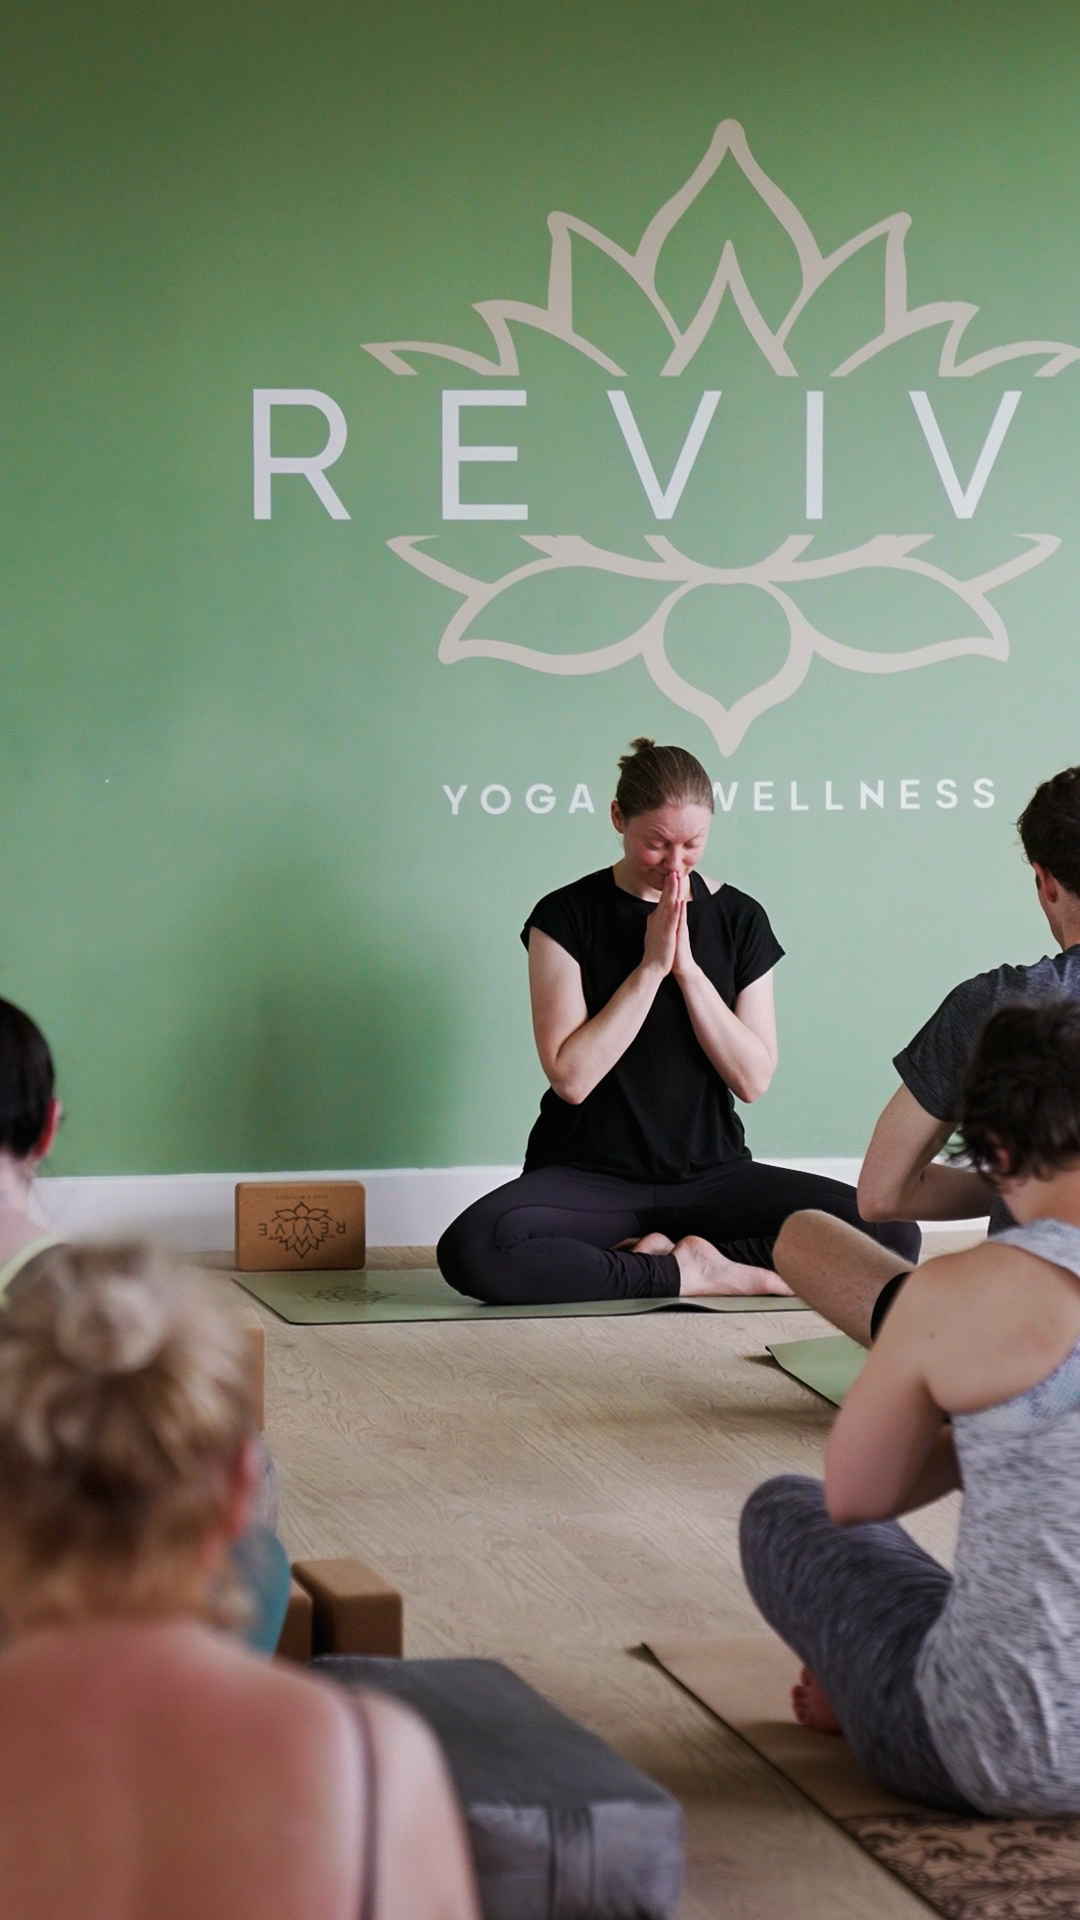 Revive Yoga & Wellness – West Lothian's Premier Hot Yoga & Wellness Centre